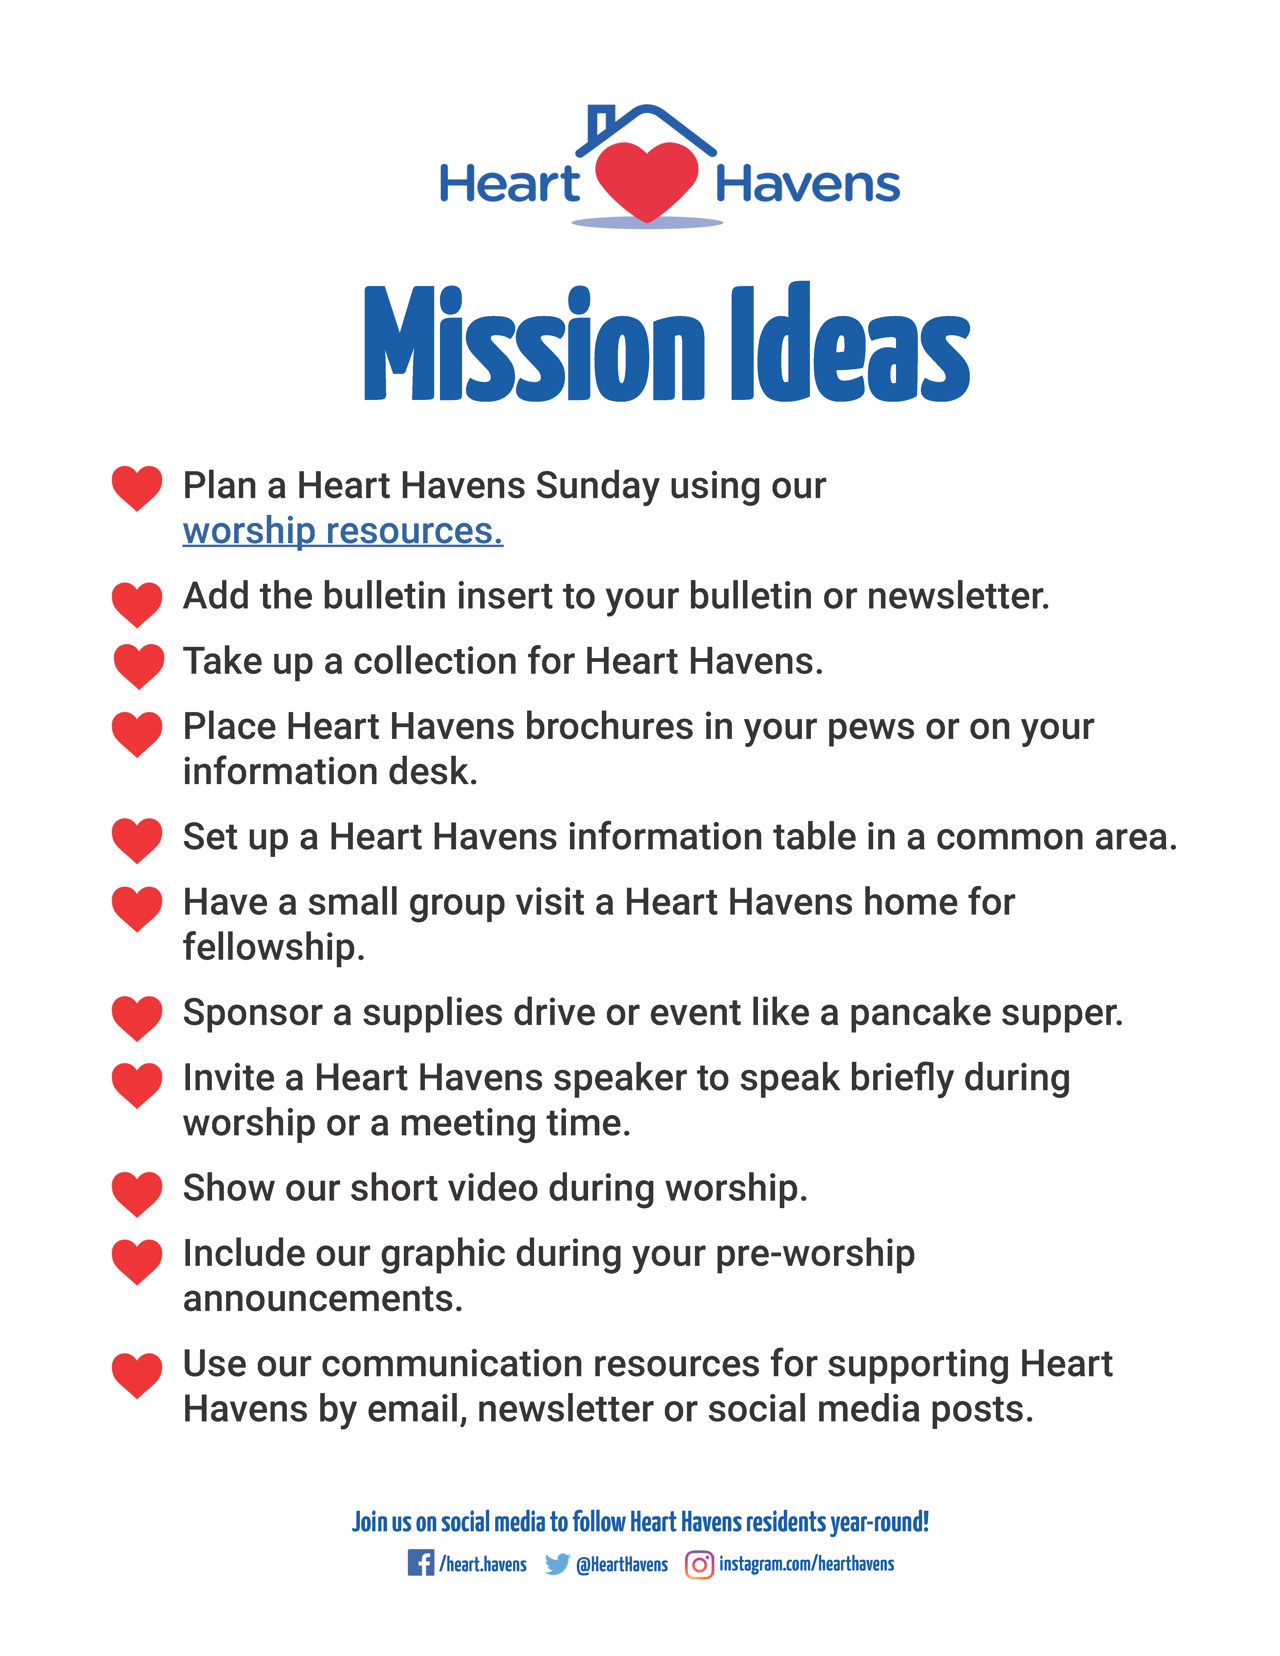 HH Mission Ideas